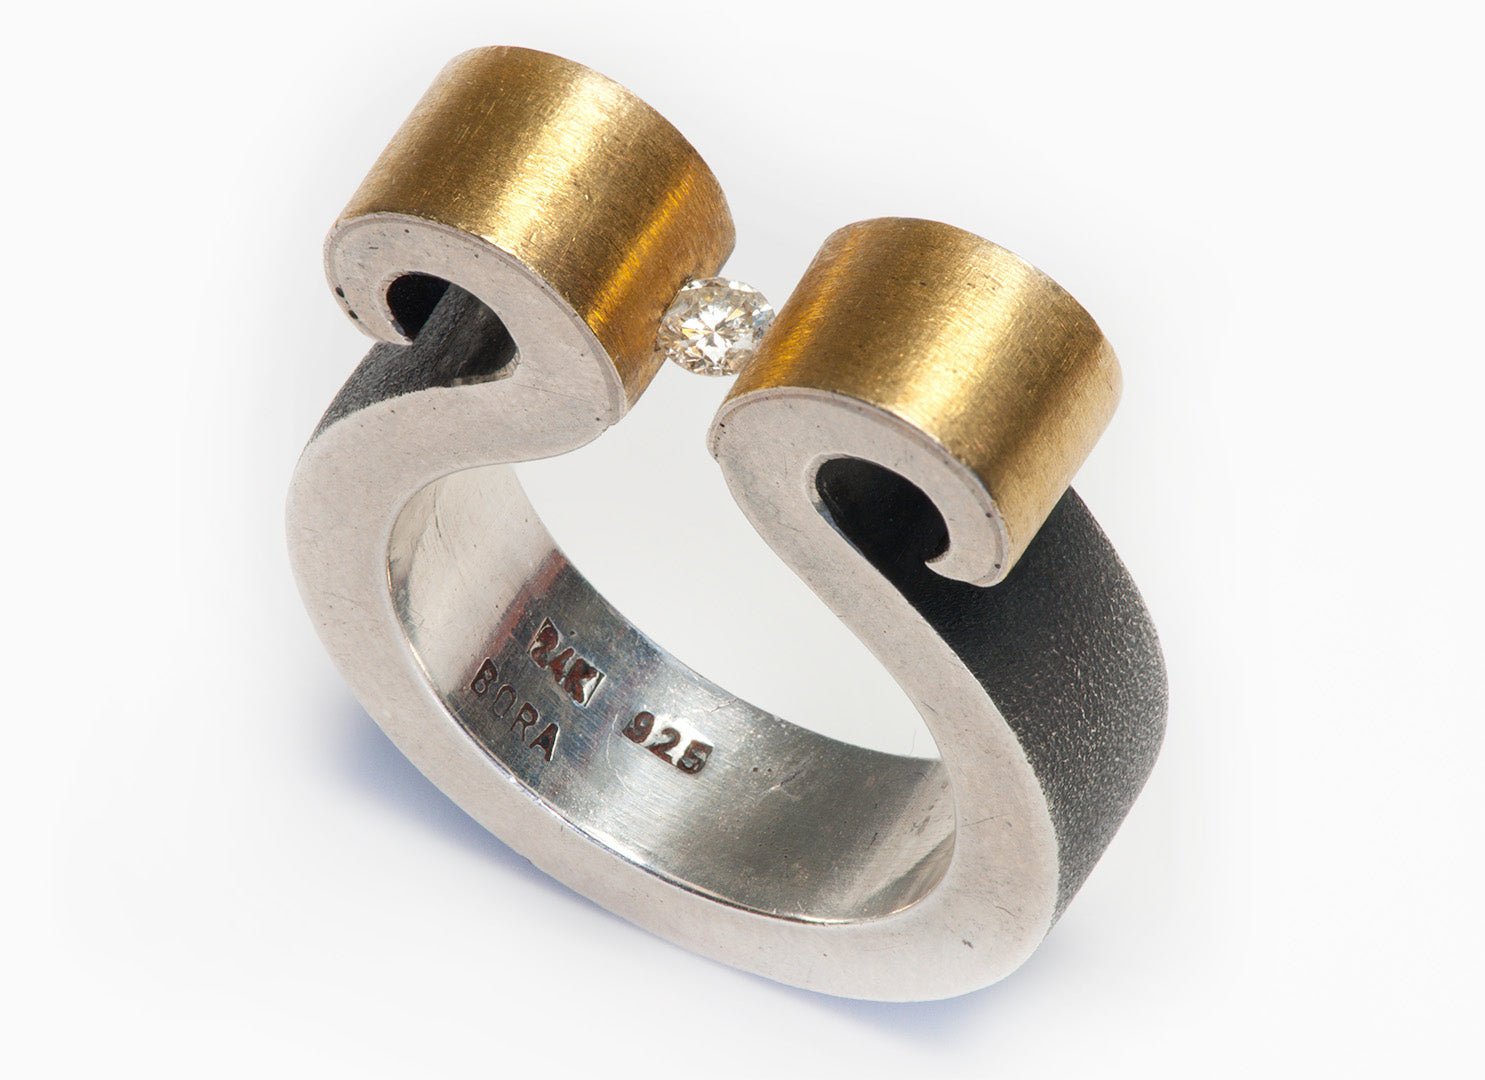 Bora Silver 24K Gold Tension Set Diamond Ring